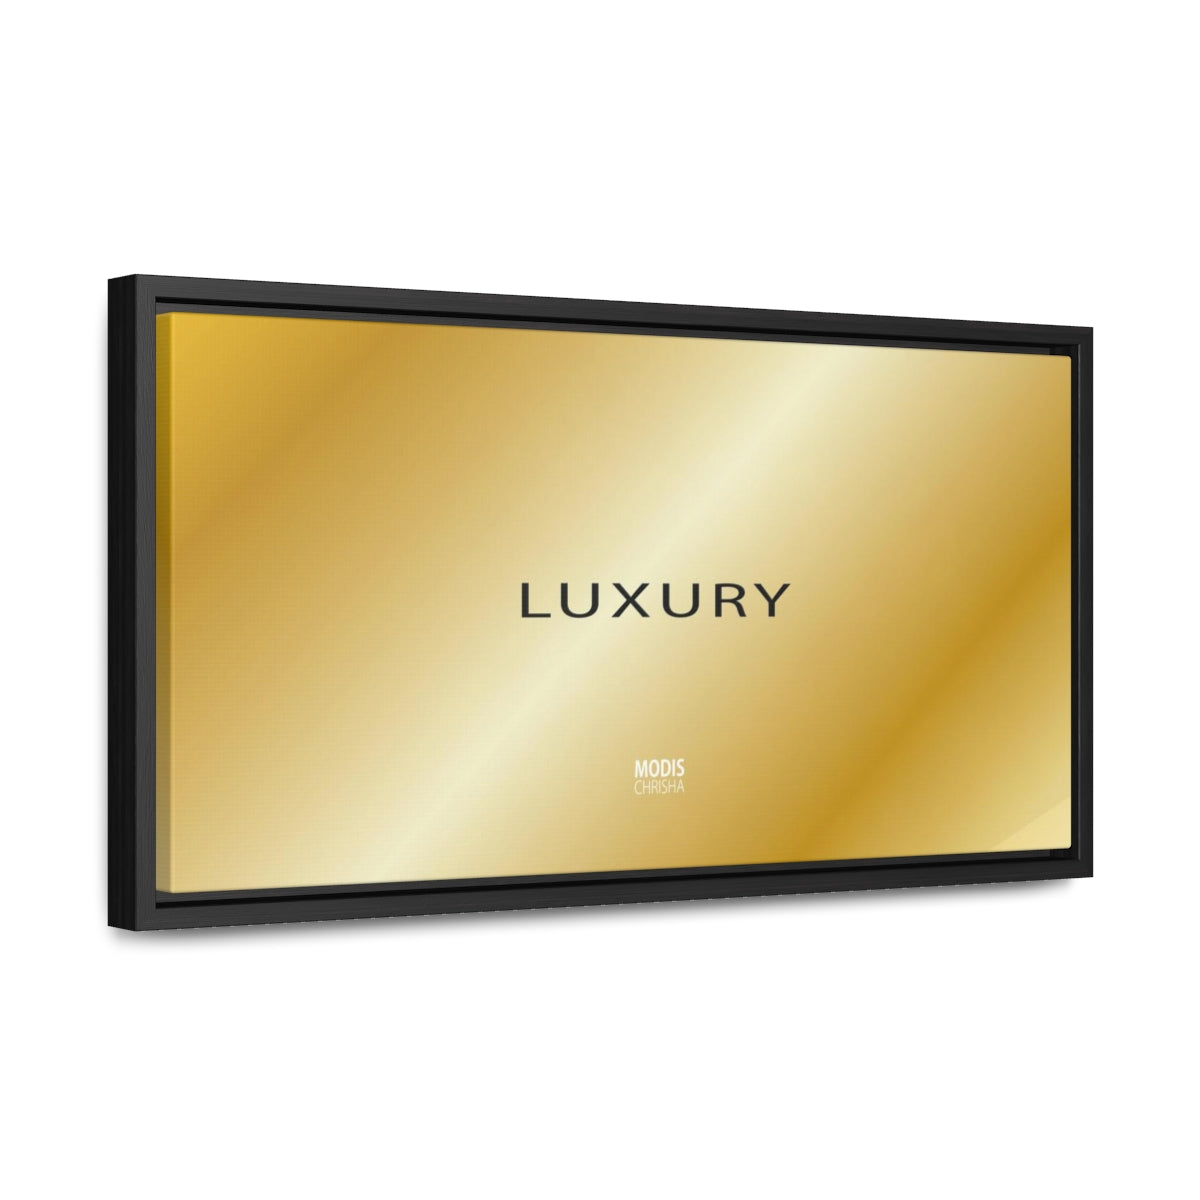 Canvas Gallery Wraps Frame Horizontal 20“ x 10“ - Design Luxury